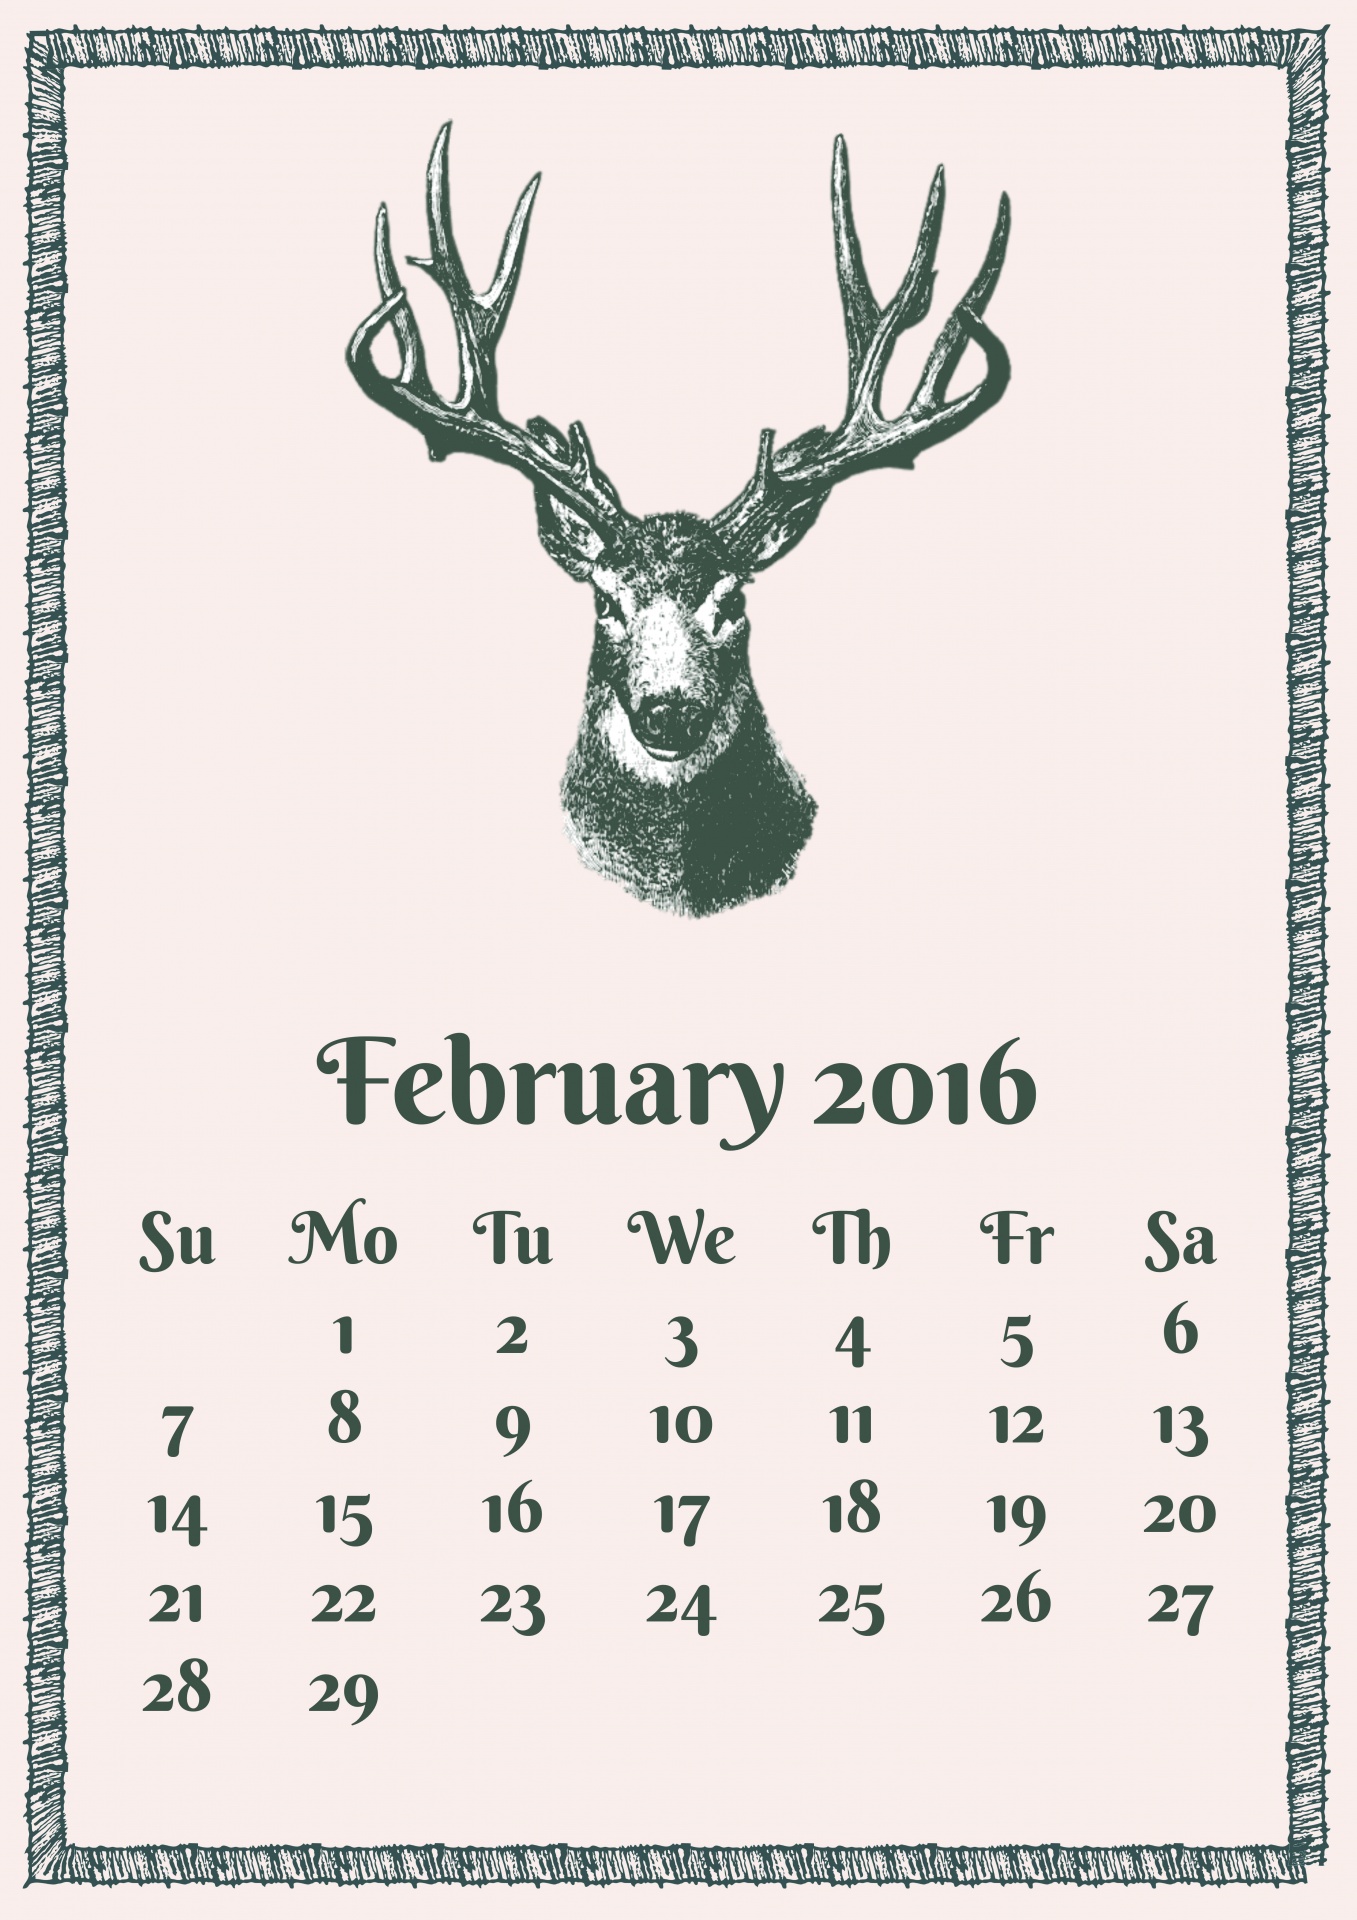 february 2016 2016 calendar free photo